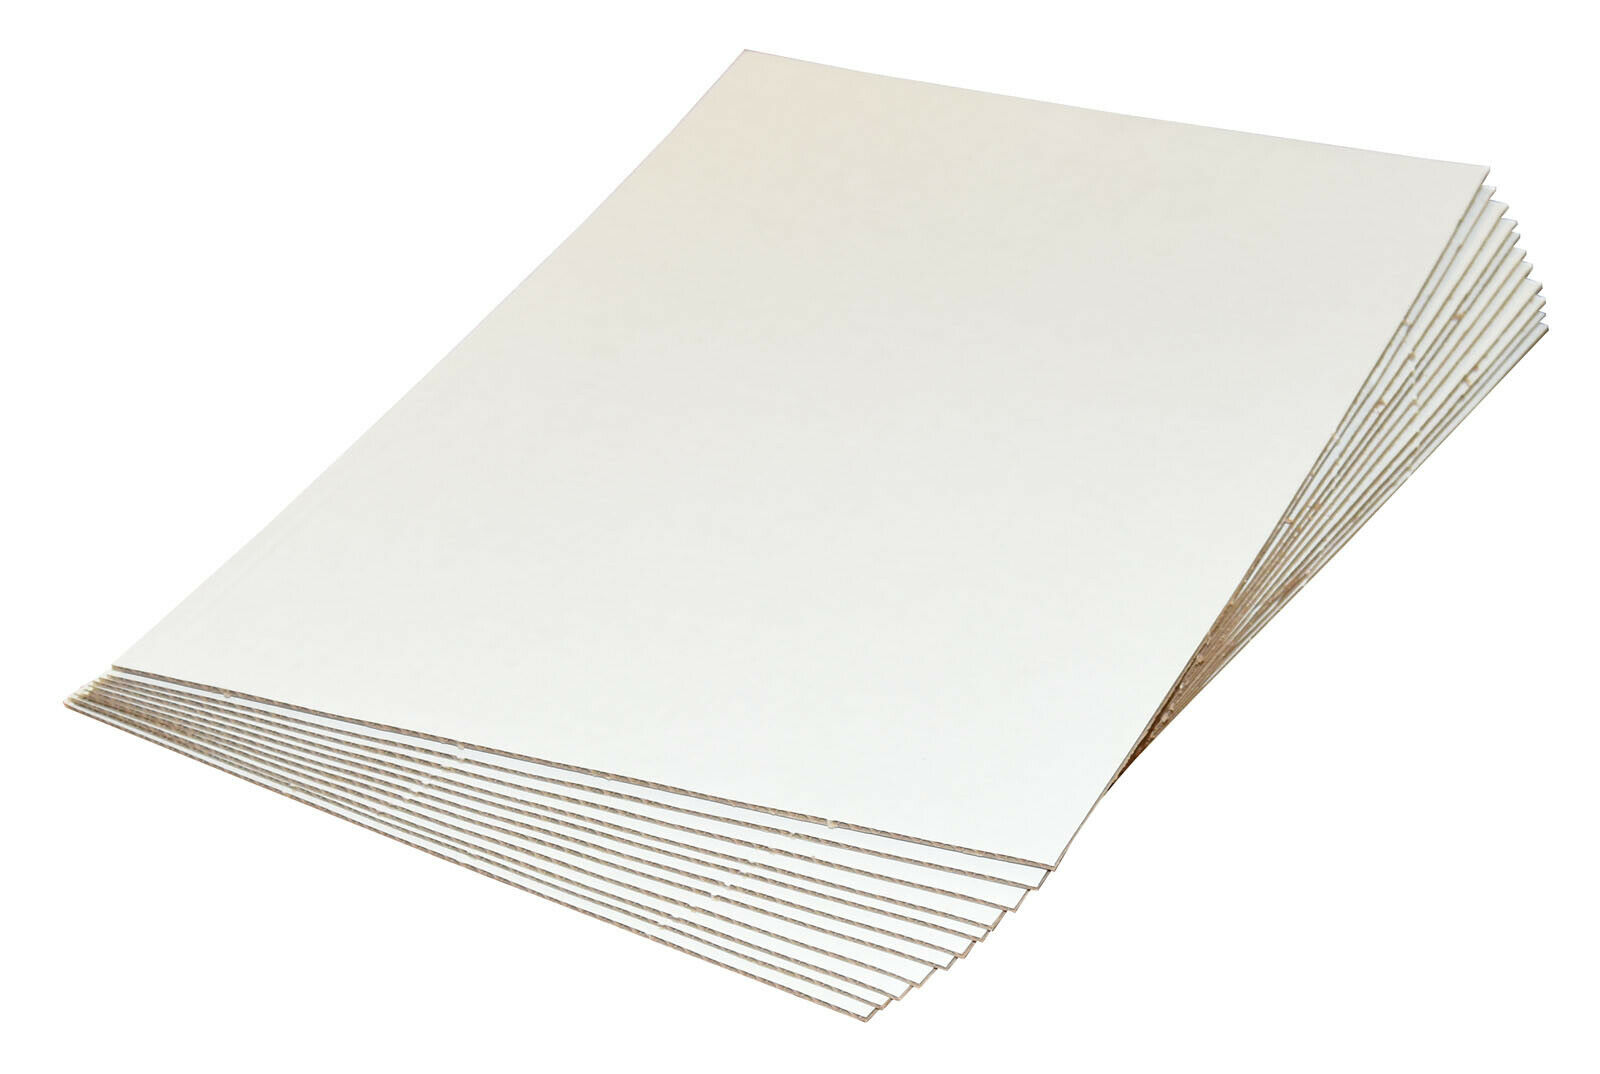 A5 A4 A3 A2 A1 A0 White Cardboard Corrugated Sheets Pads Divider Art Craft Board